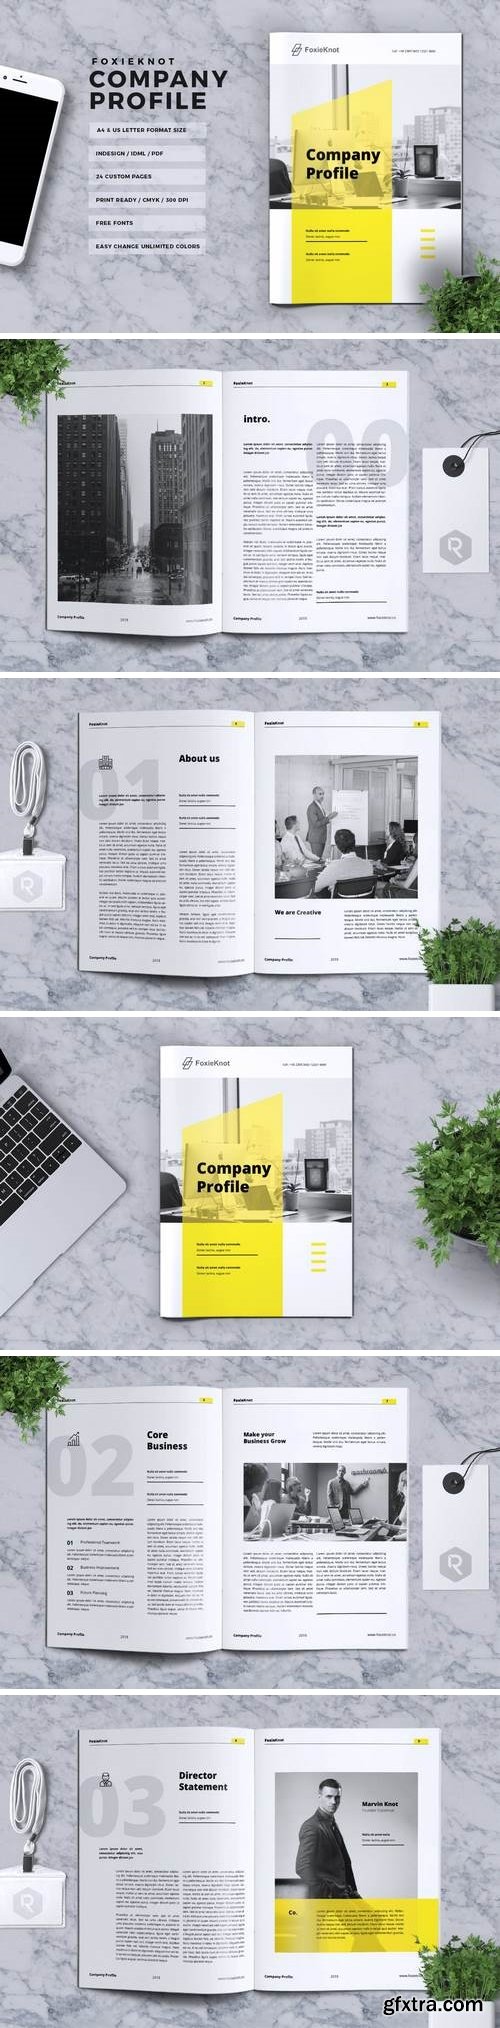 FOXIEKNOT - Company Profile Brochure